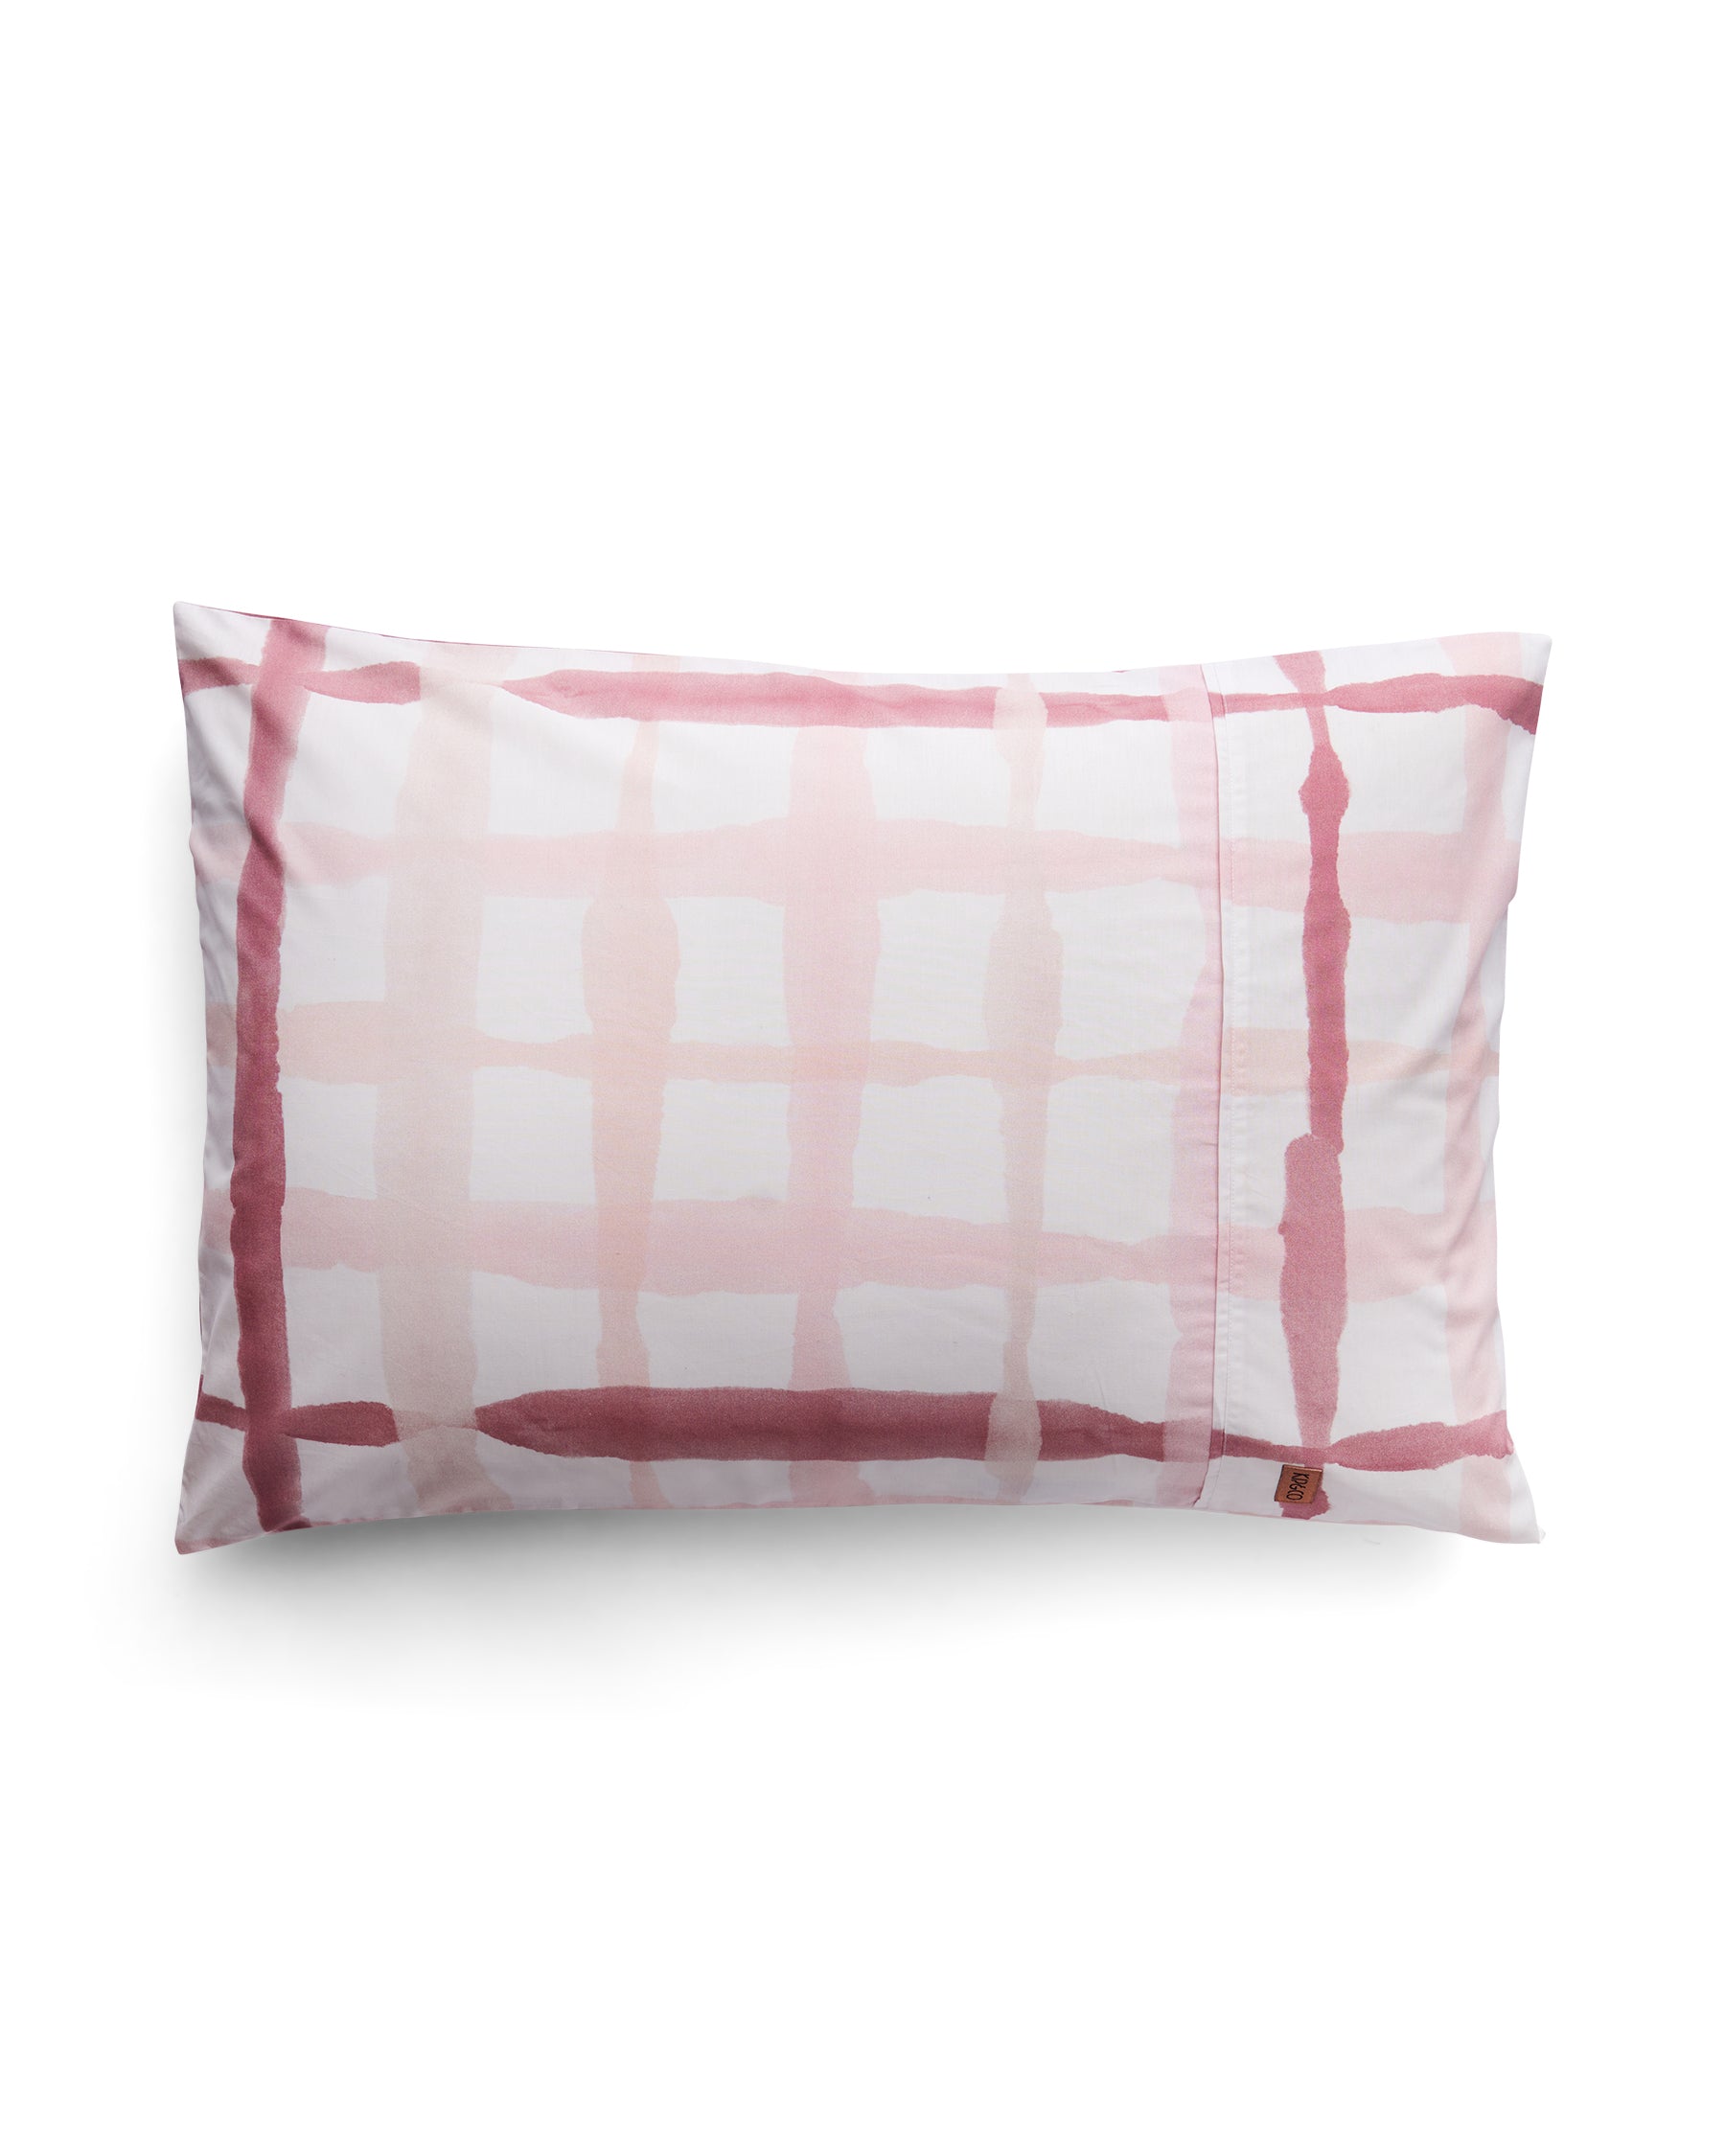 Cotton Pillowcase Set - Inky Wink Pink